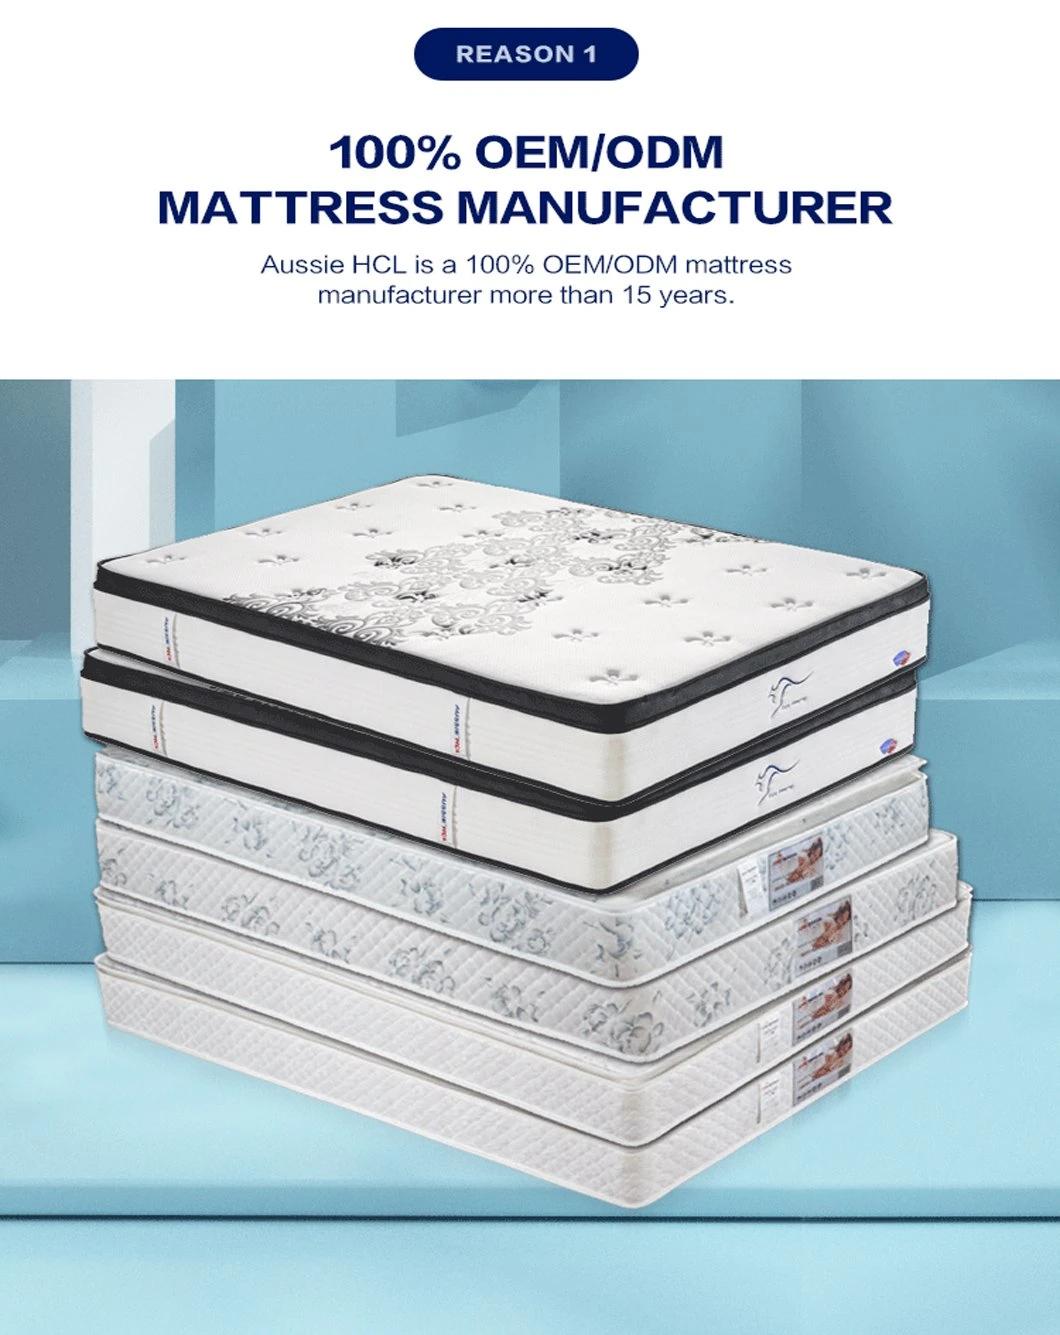 Quality Sleep Well Full Inch Mattresses Royal Cooling High Density Memory Rebonded Foam Mattress